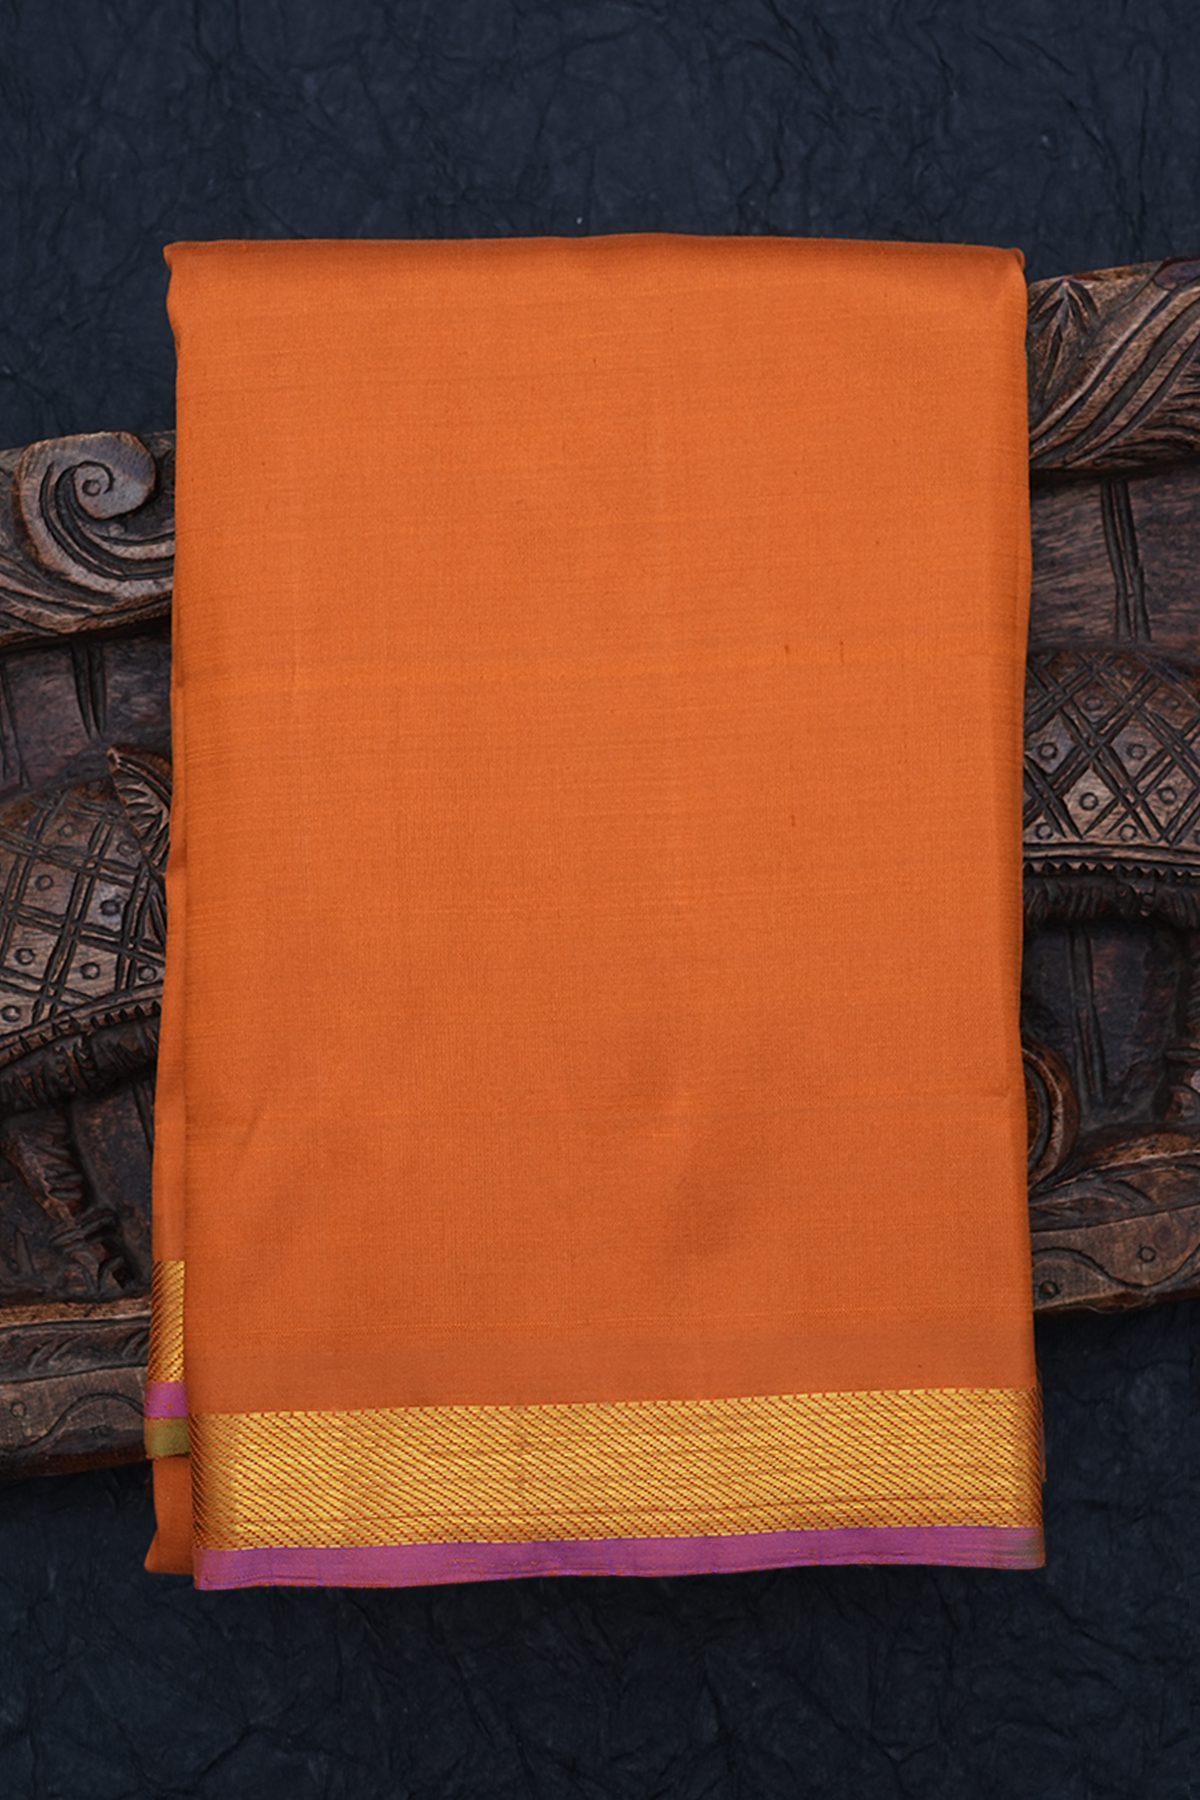 Twill Weave Zari Border Ochre Orange Kanchipuram Silk Saree